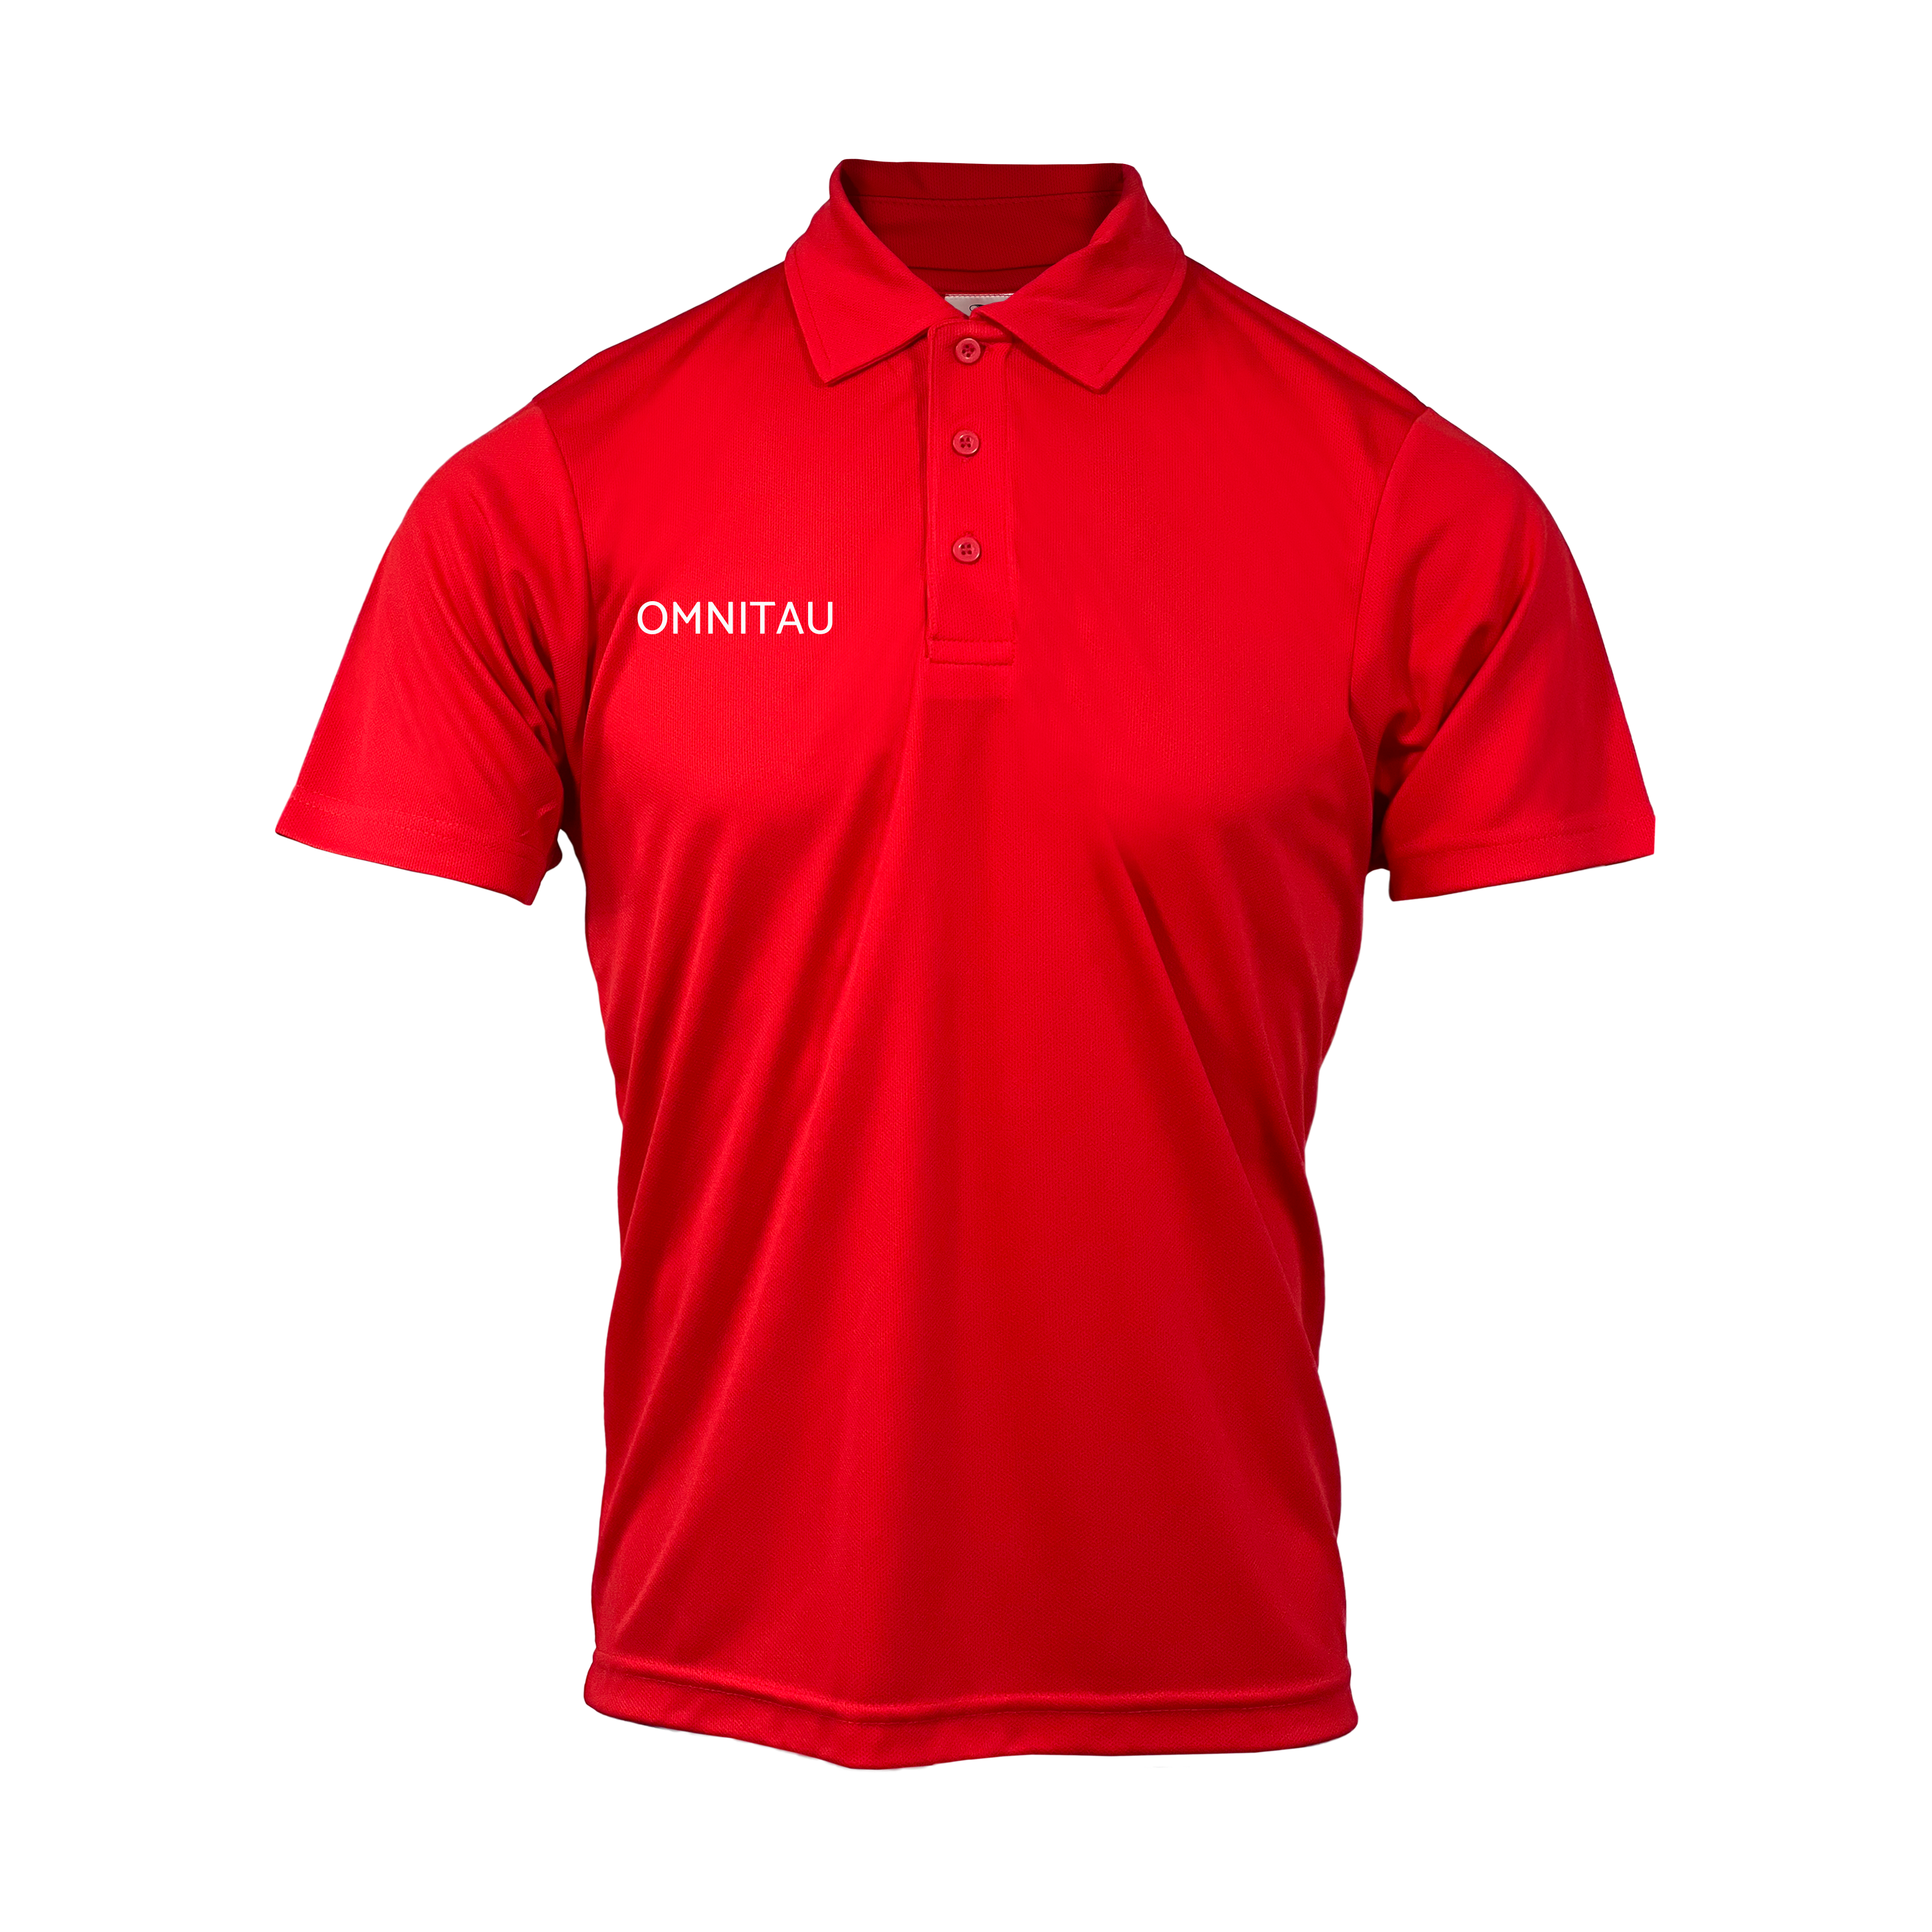 Omnitau Kid's Team Sports Core Cricket Polo Shirt - Red